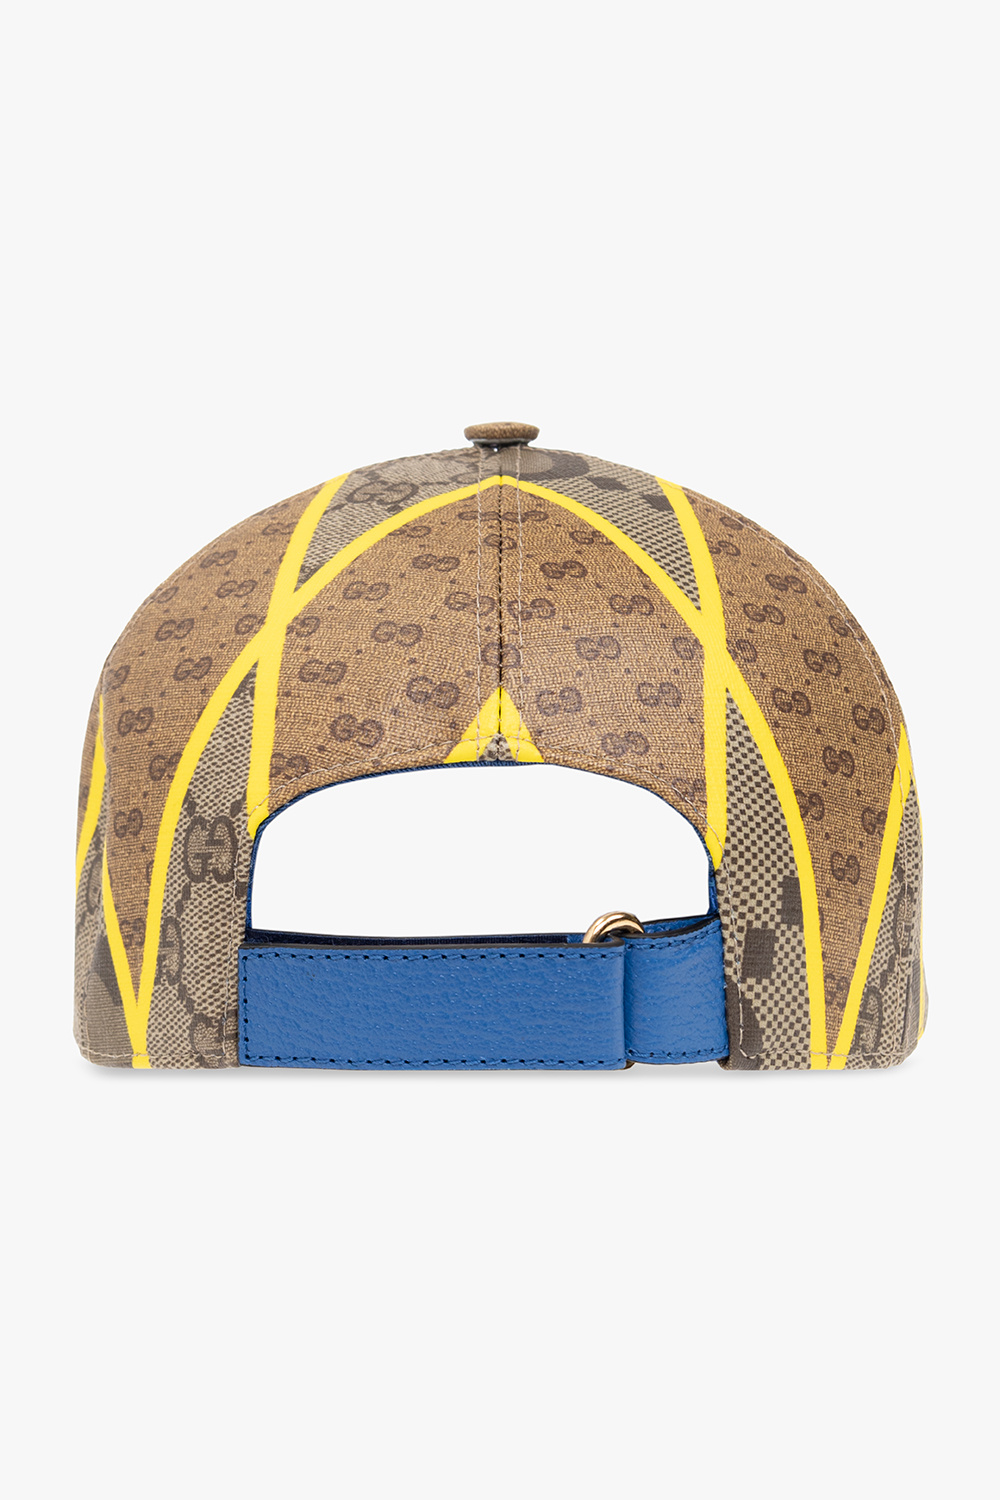 Gucci Baseball cap